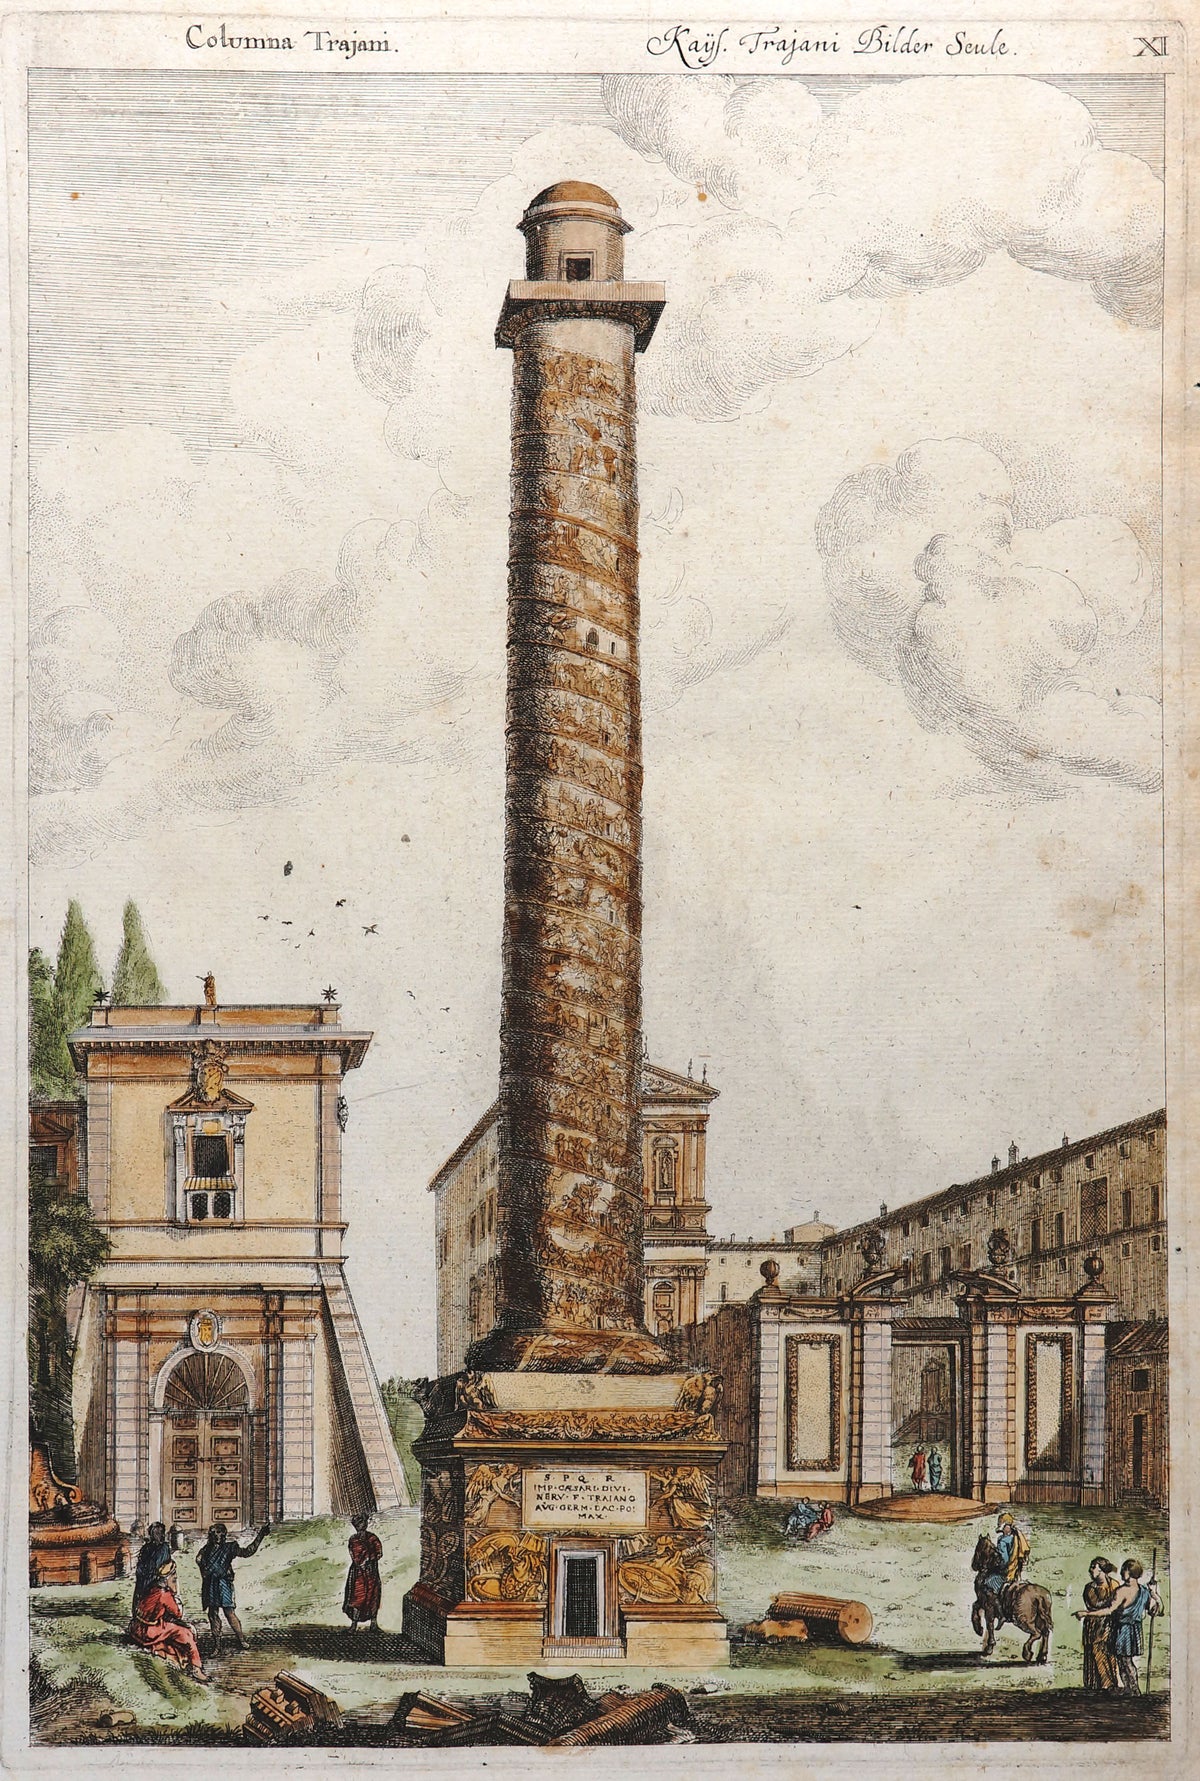 Trajan Column, Rome, Italy - Authentic Vintage Poster